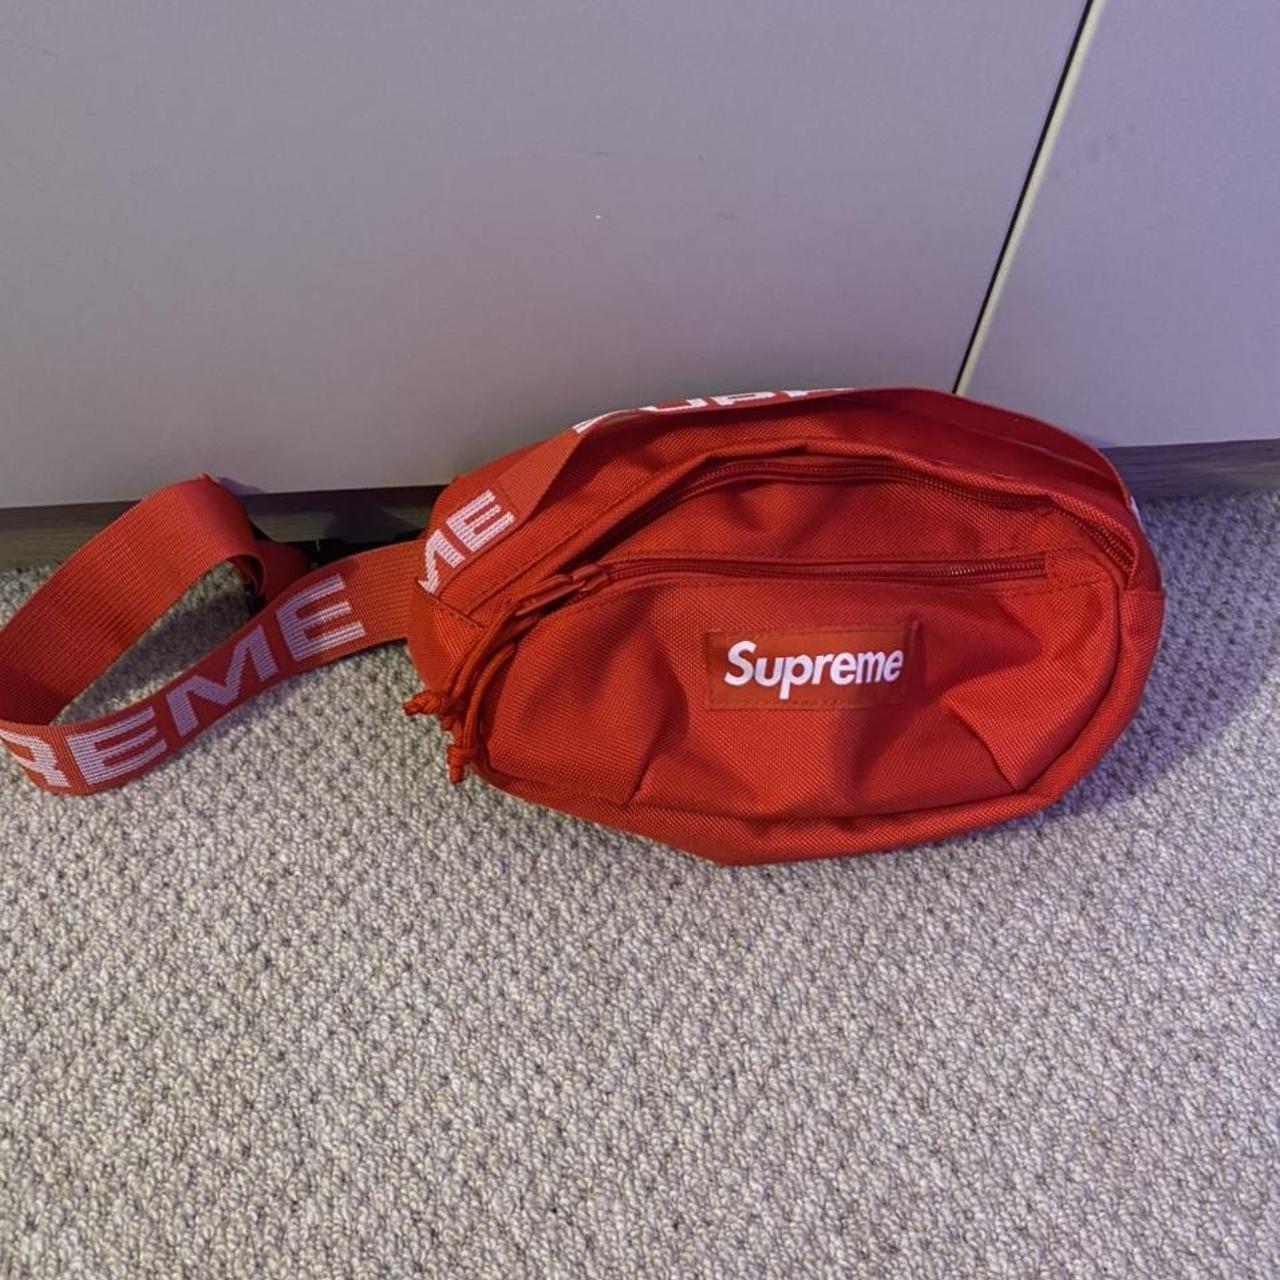 Red supreme bum bag / waist bag Bought as a... - Depop